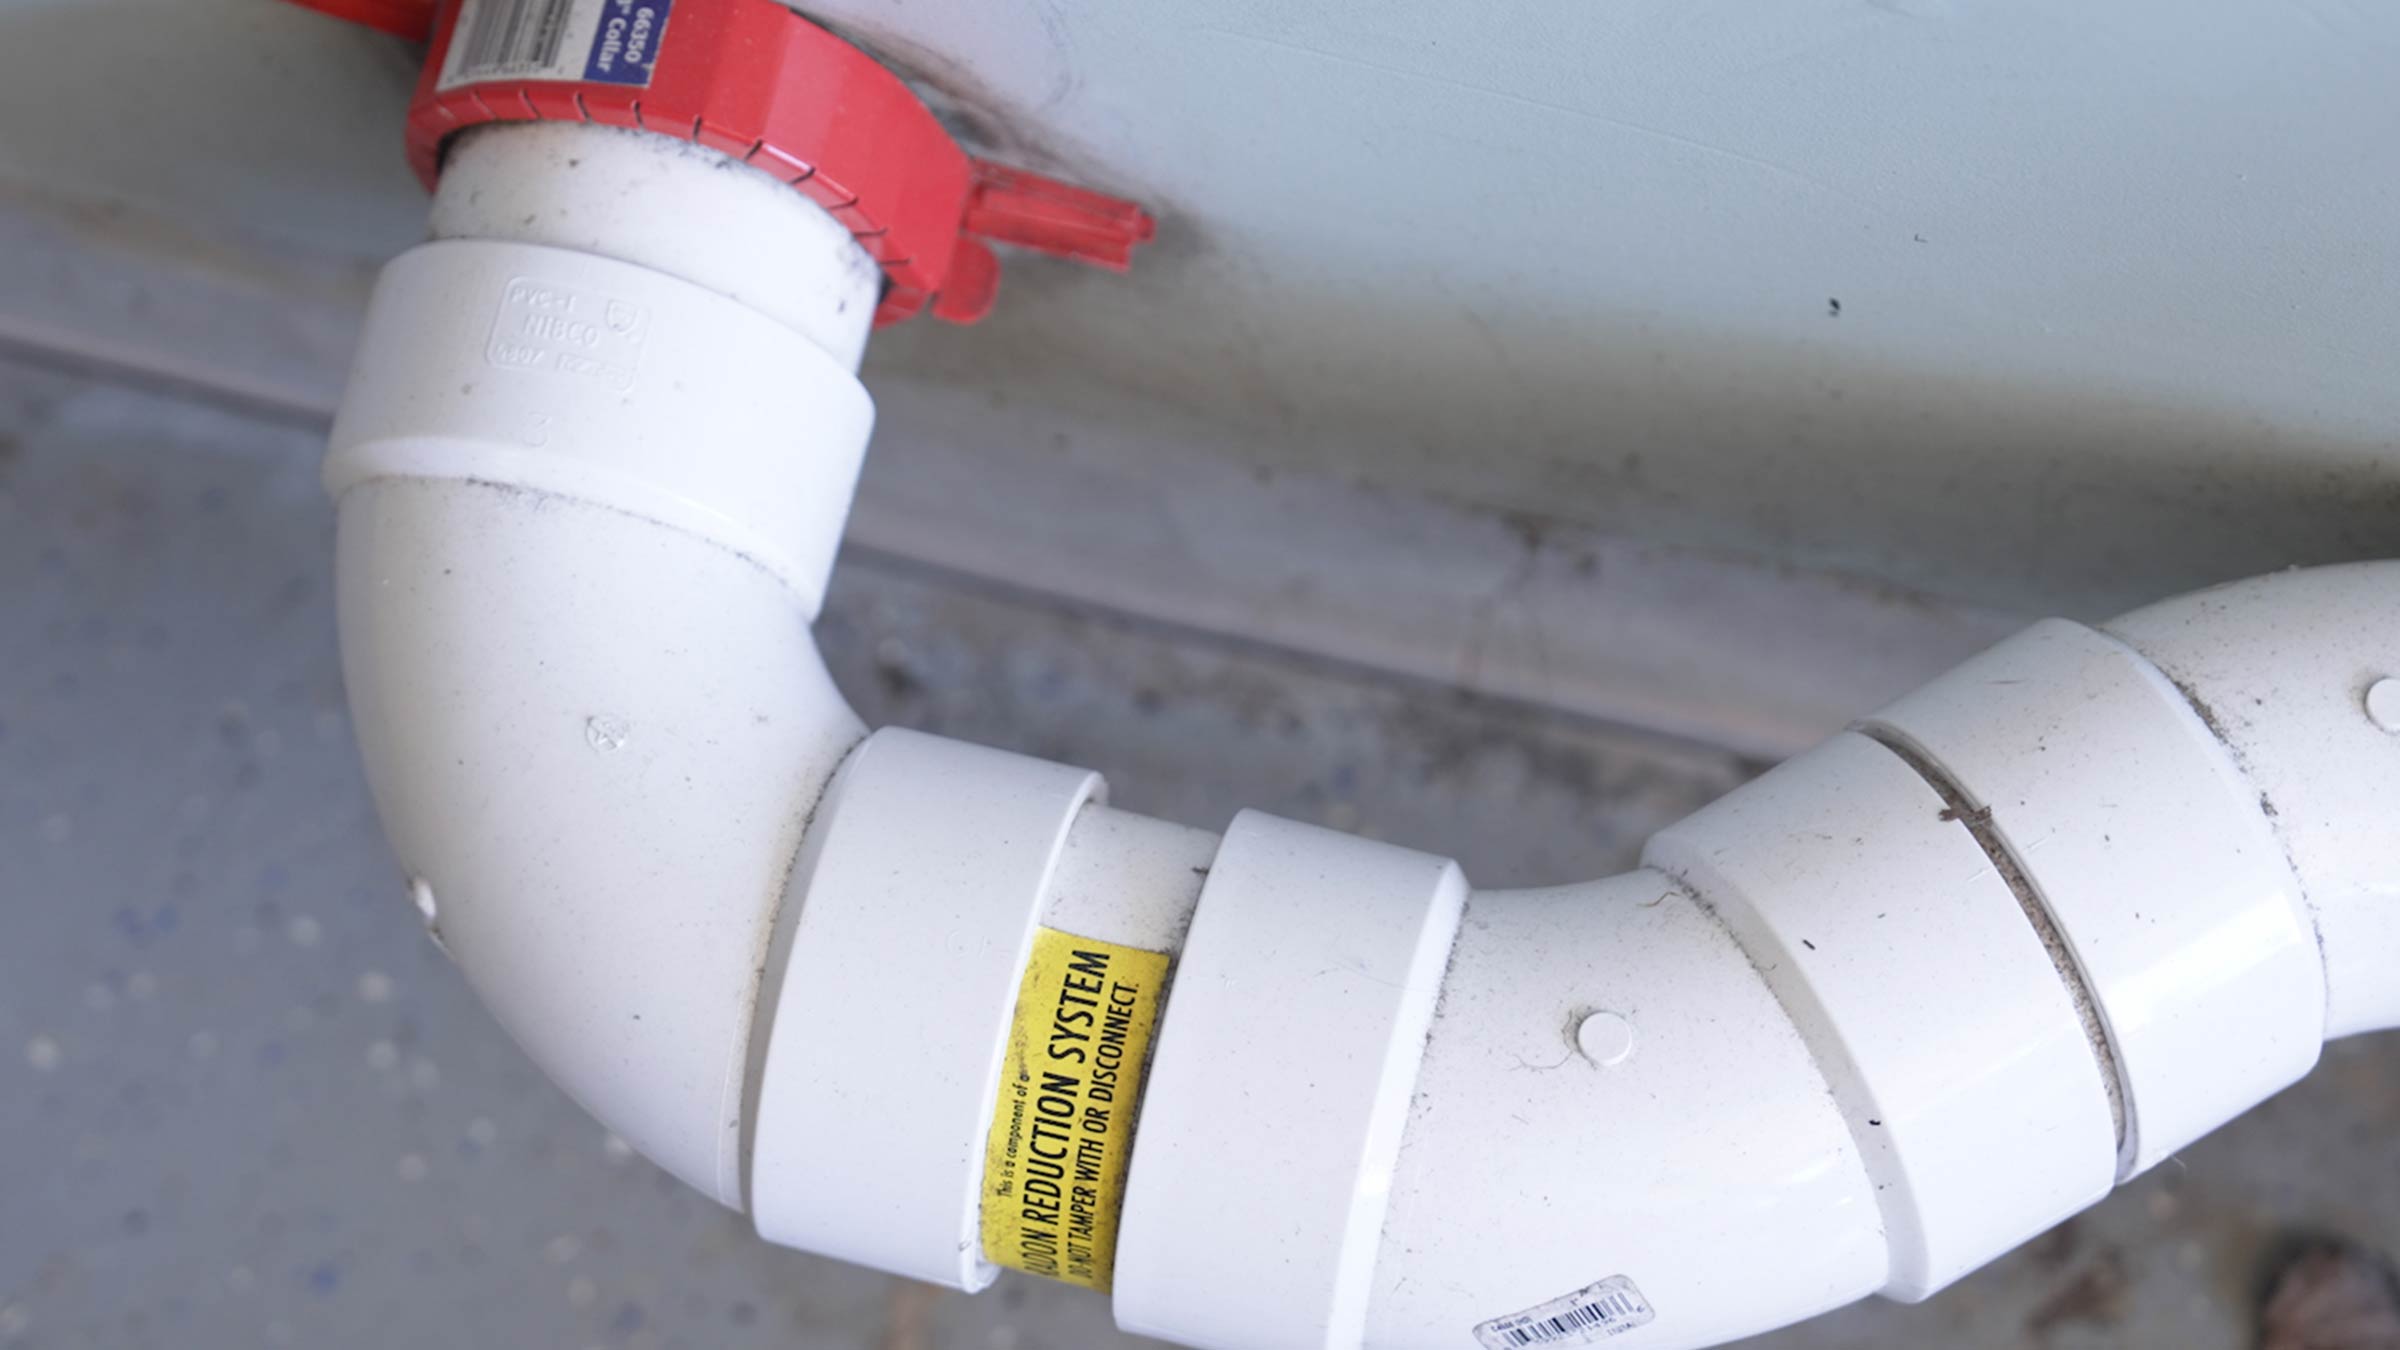 PVC plumbing for a radon remediation system